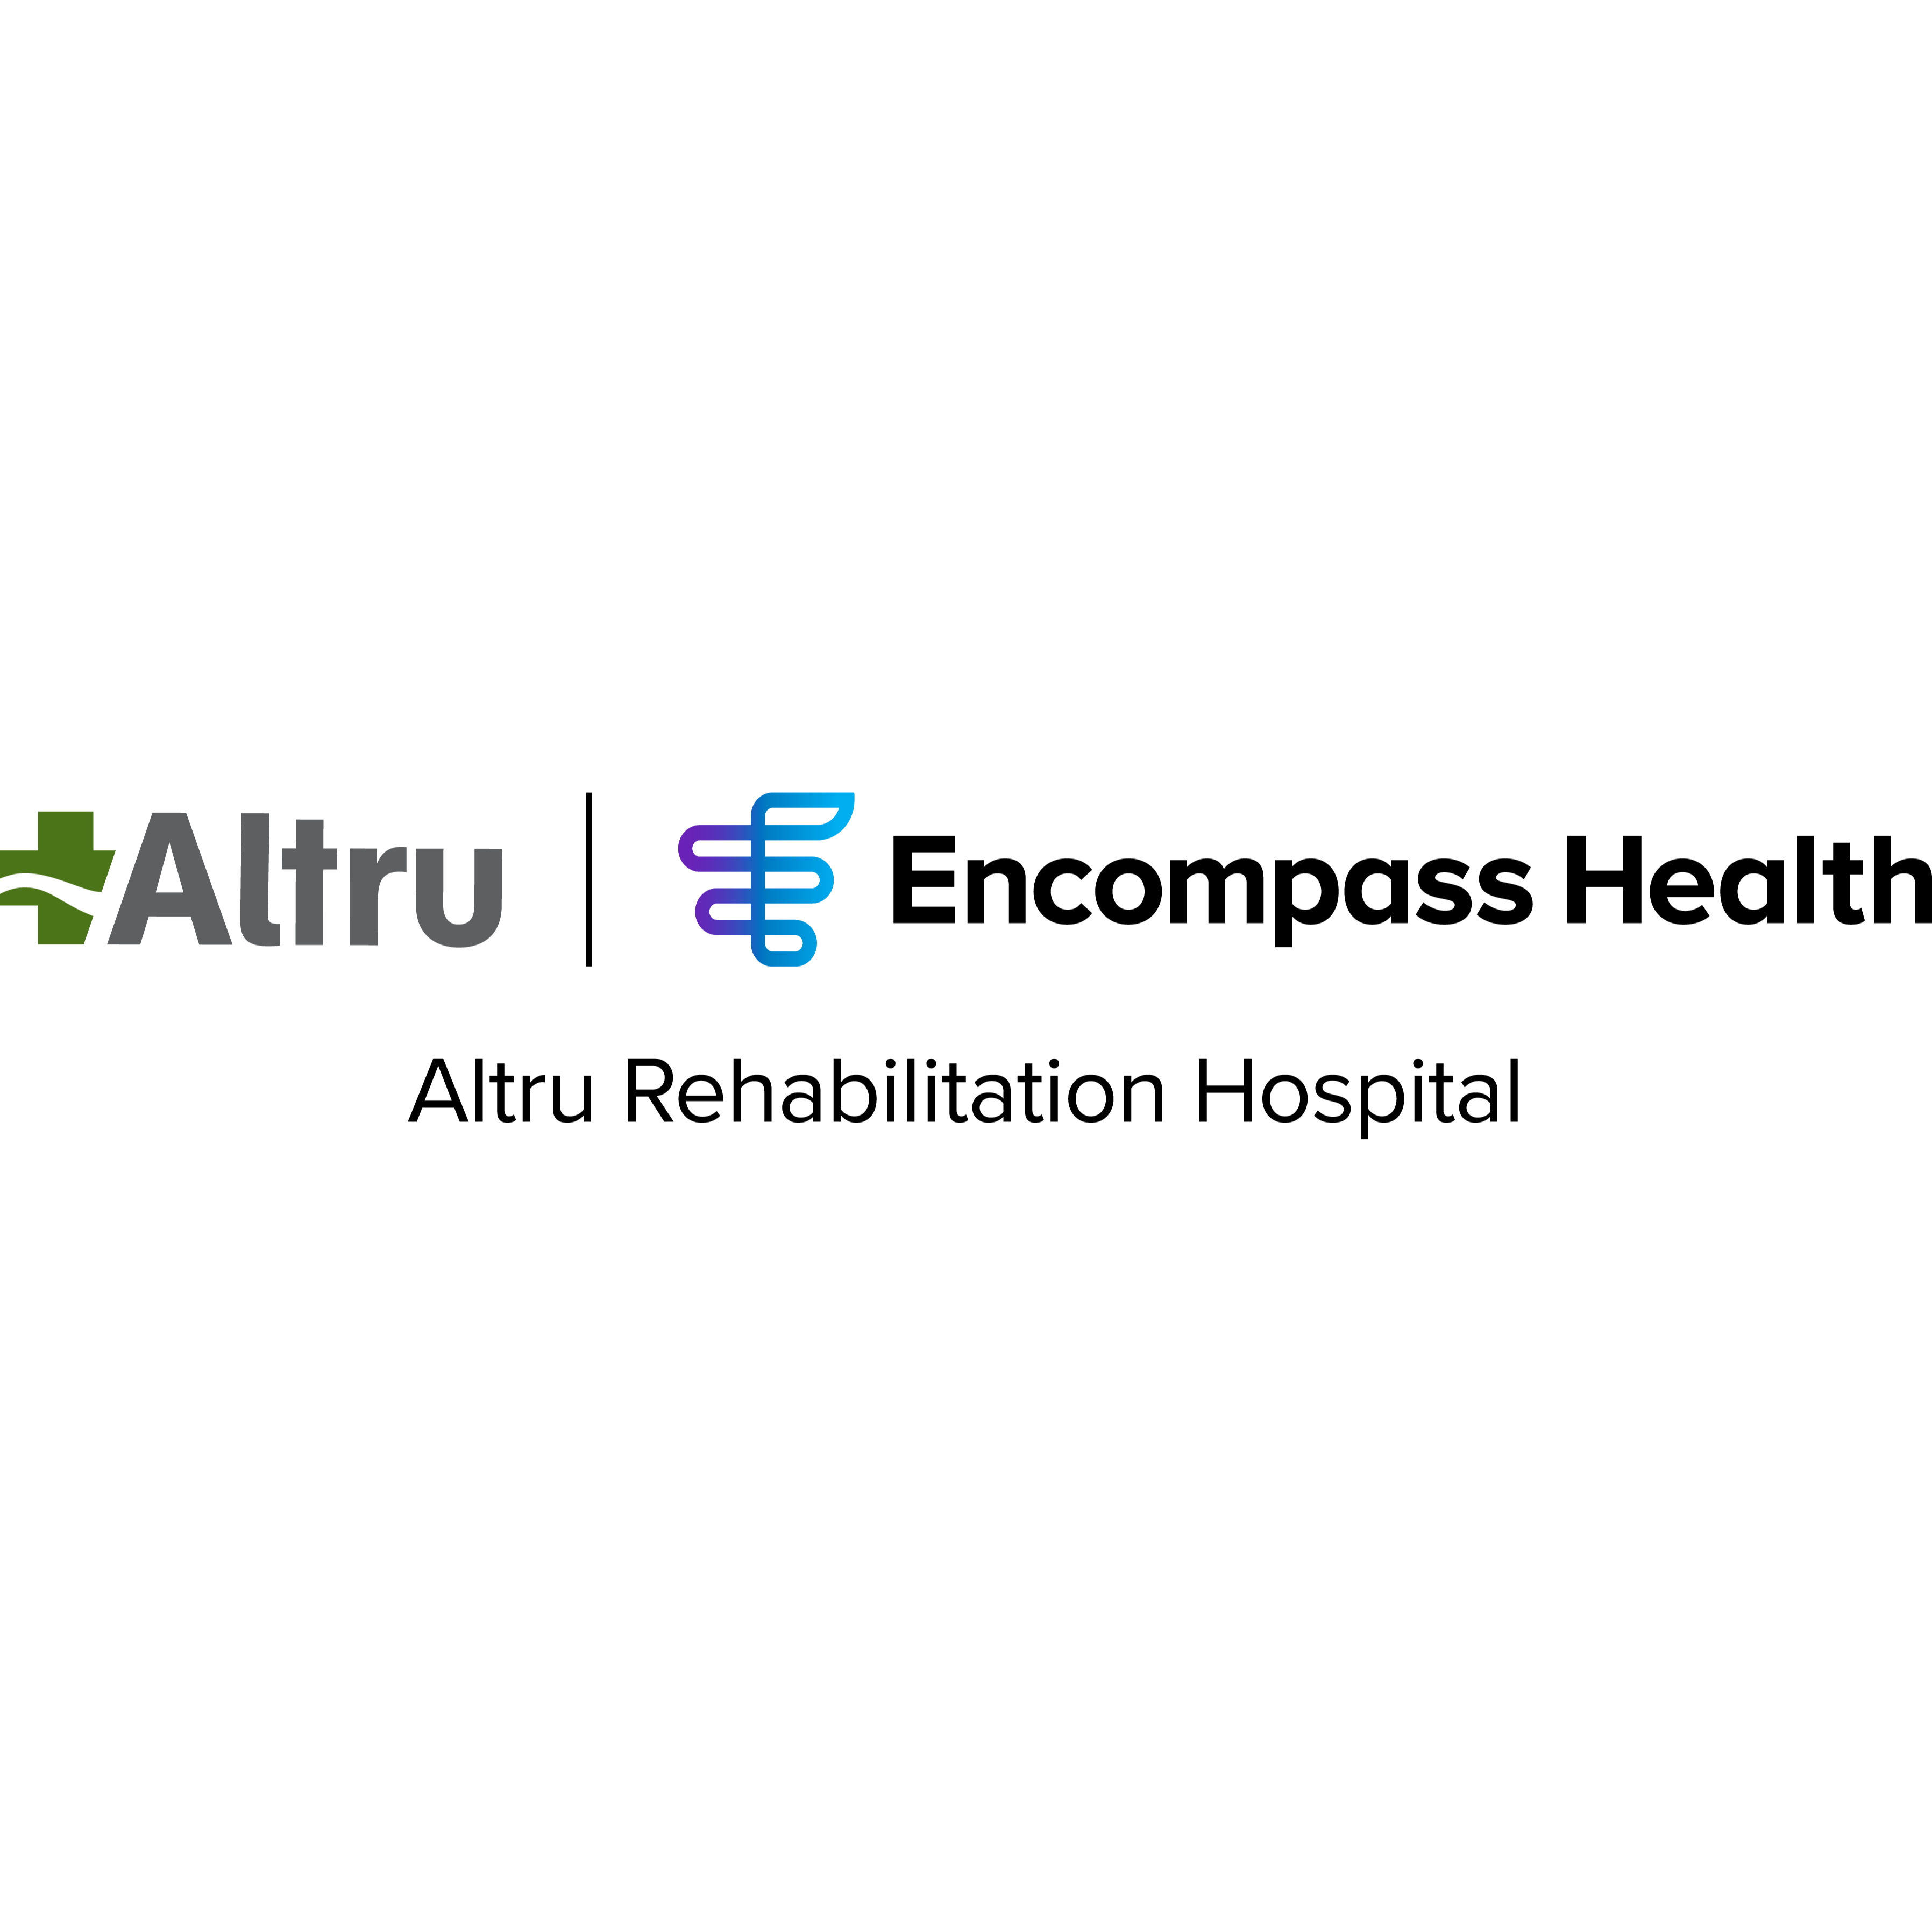 Altru Rehabilitation Hospital, an affiliate of Encompass Health